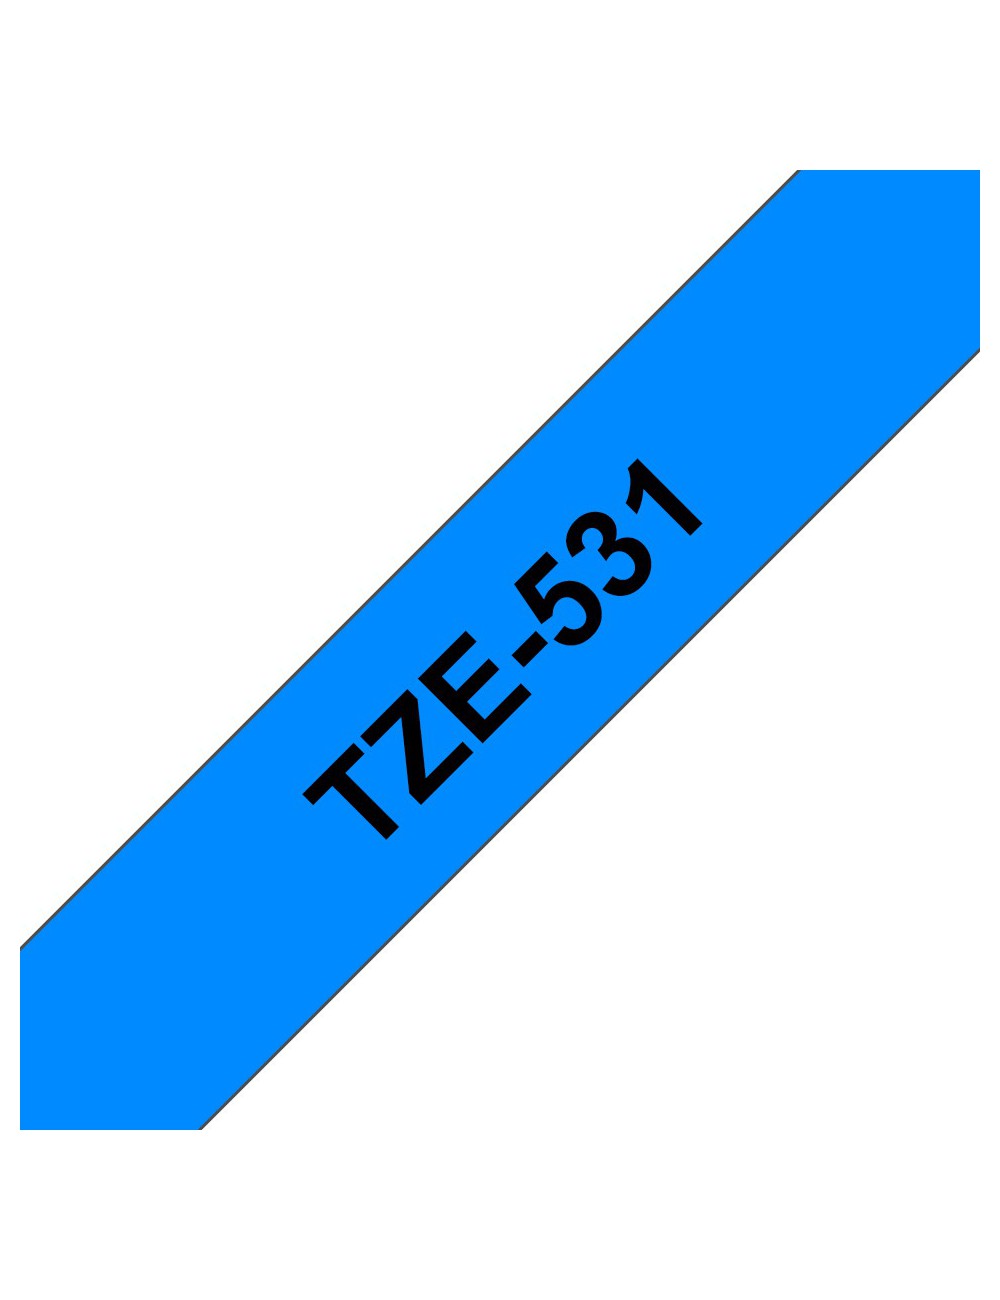 Brother TZE-531 nastro per etichettatrice TZ